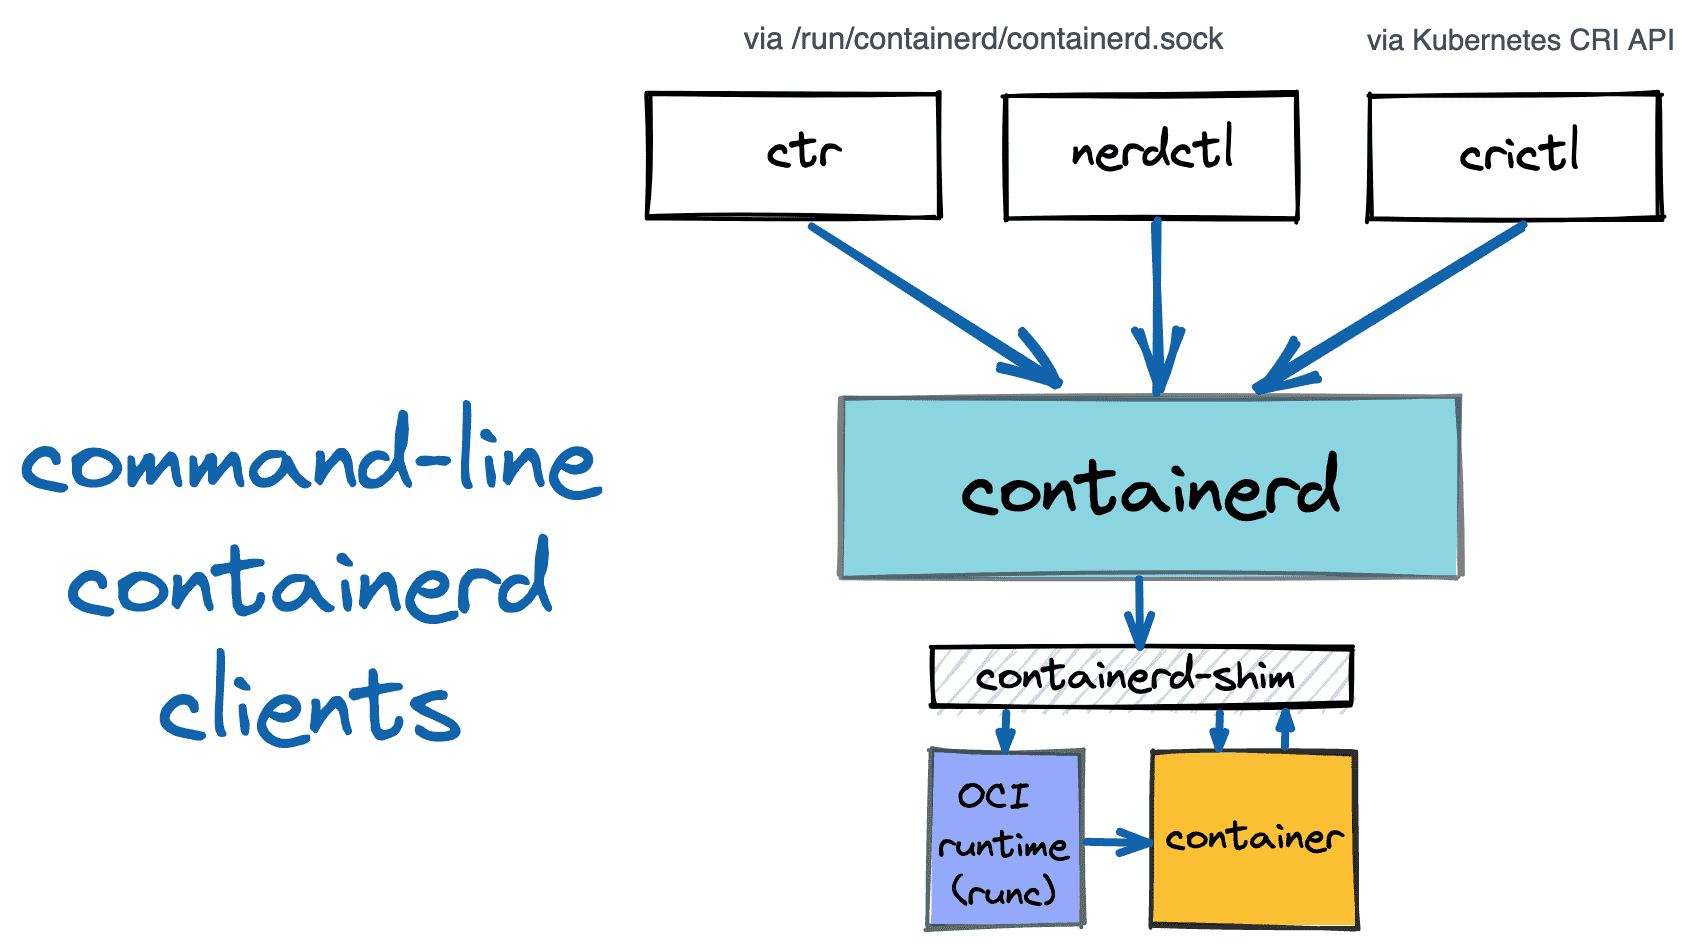 containerd command-line clients (ctr, nerdctl, crictl)